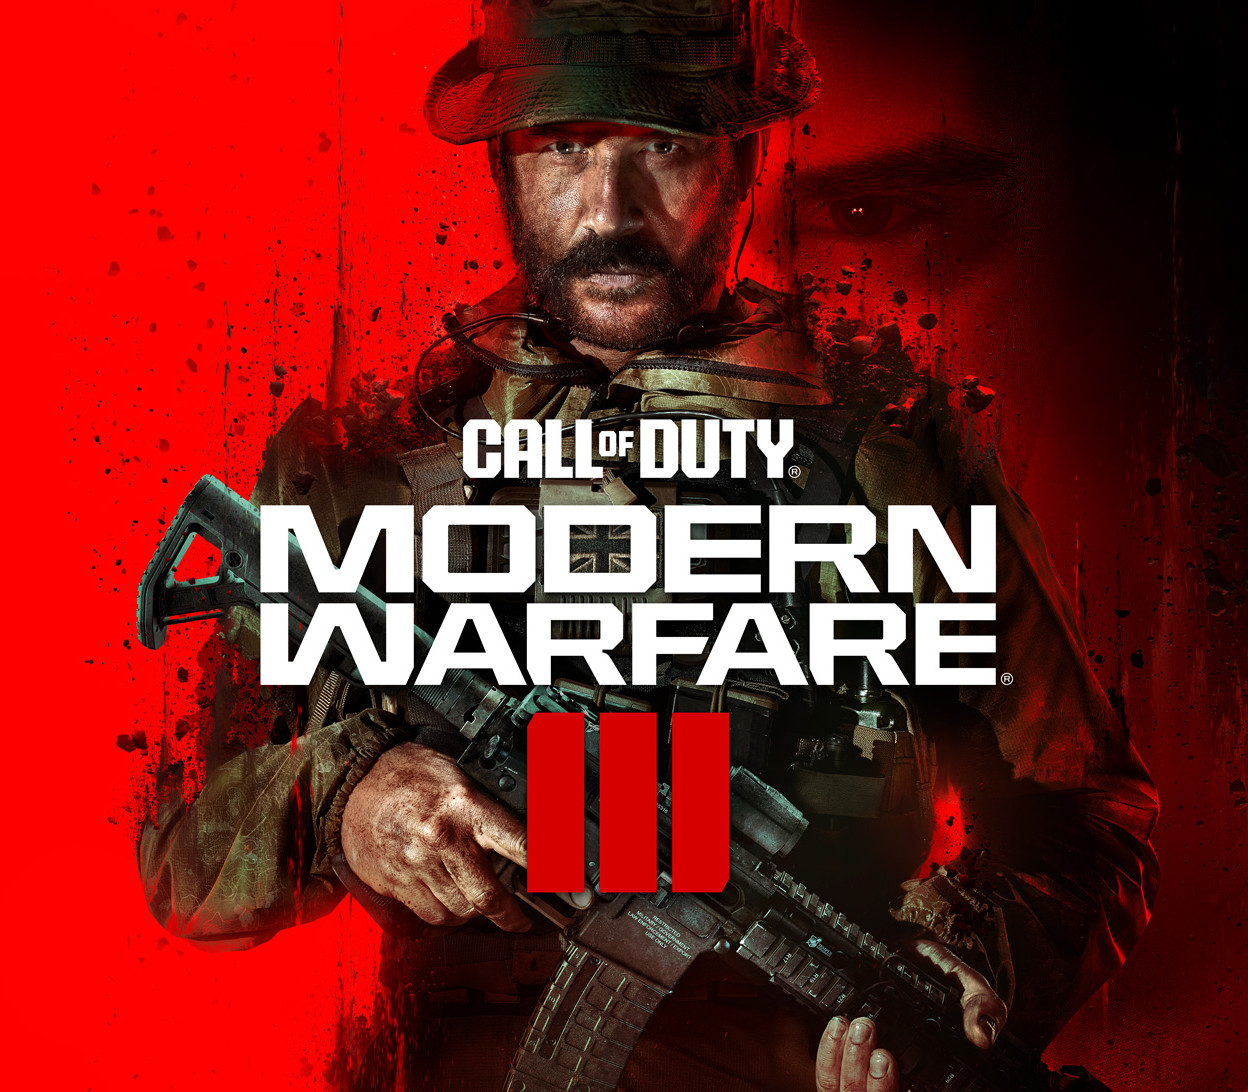 Call of Duty: Modern Warfare III PlayStation 4 Account pixelpuffin.net Activation Link